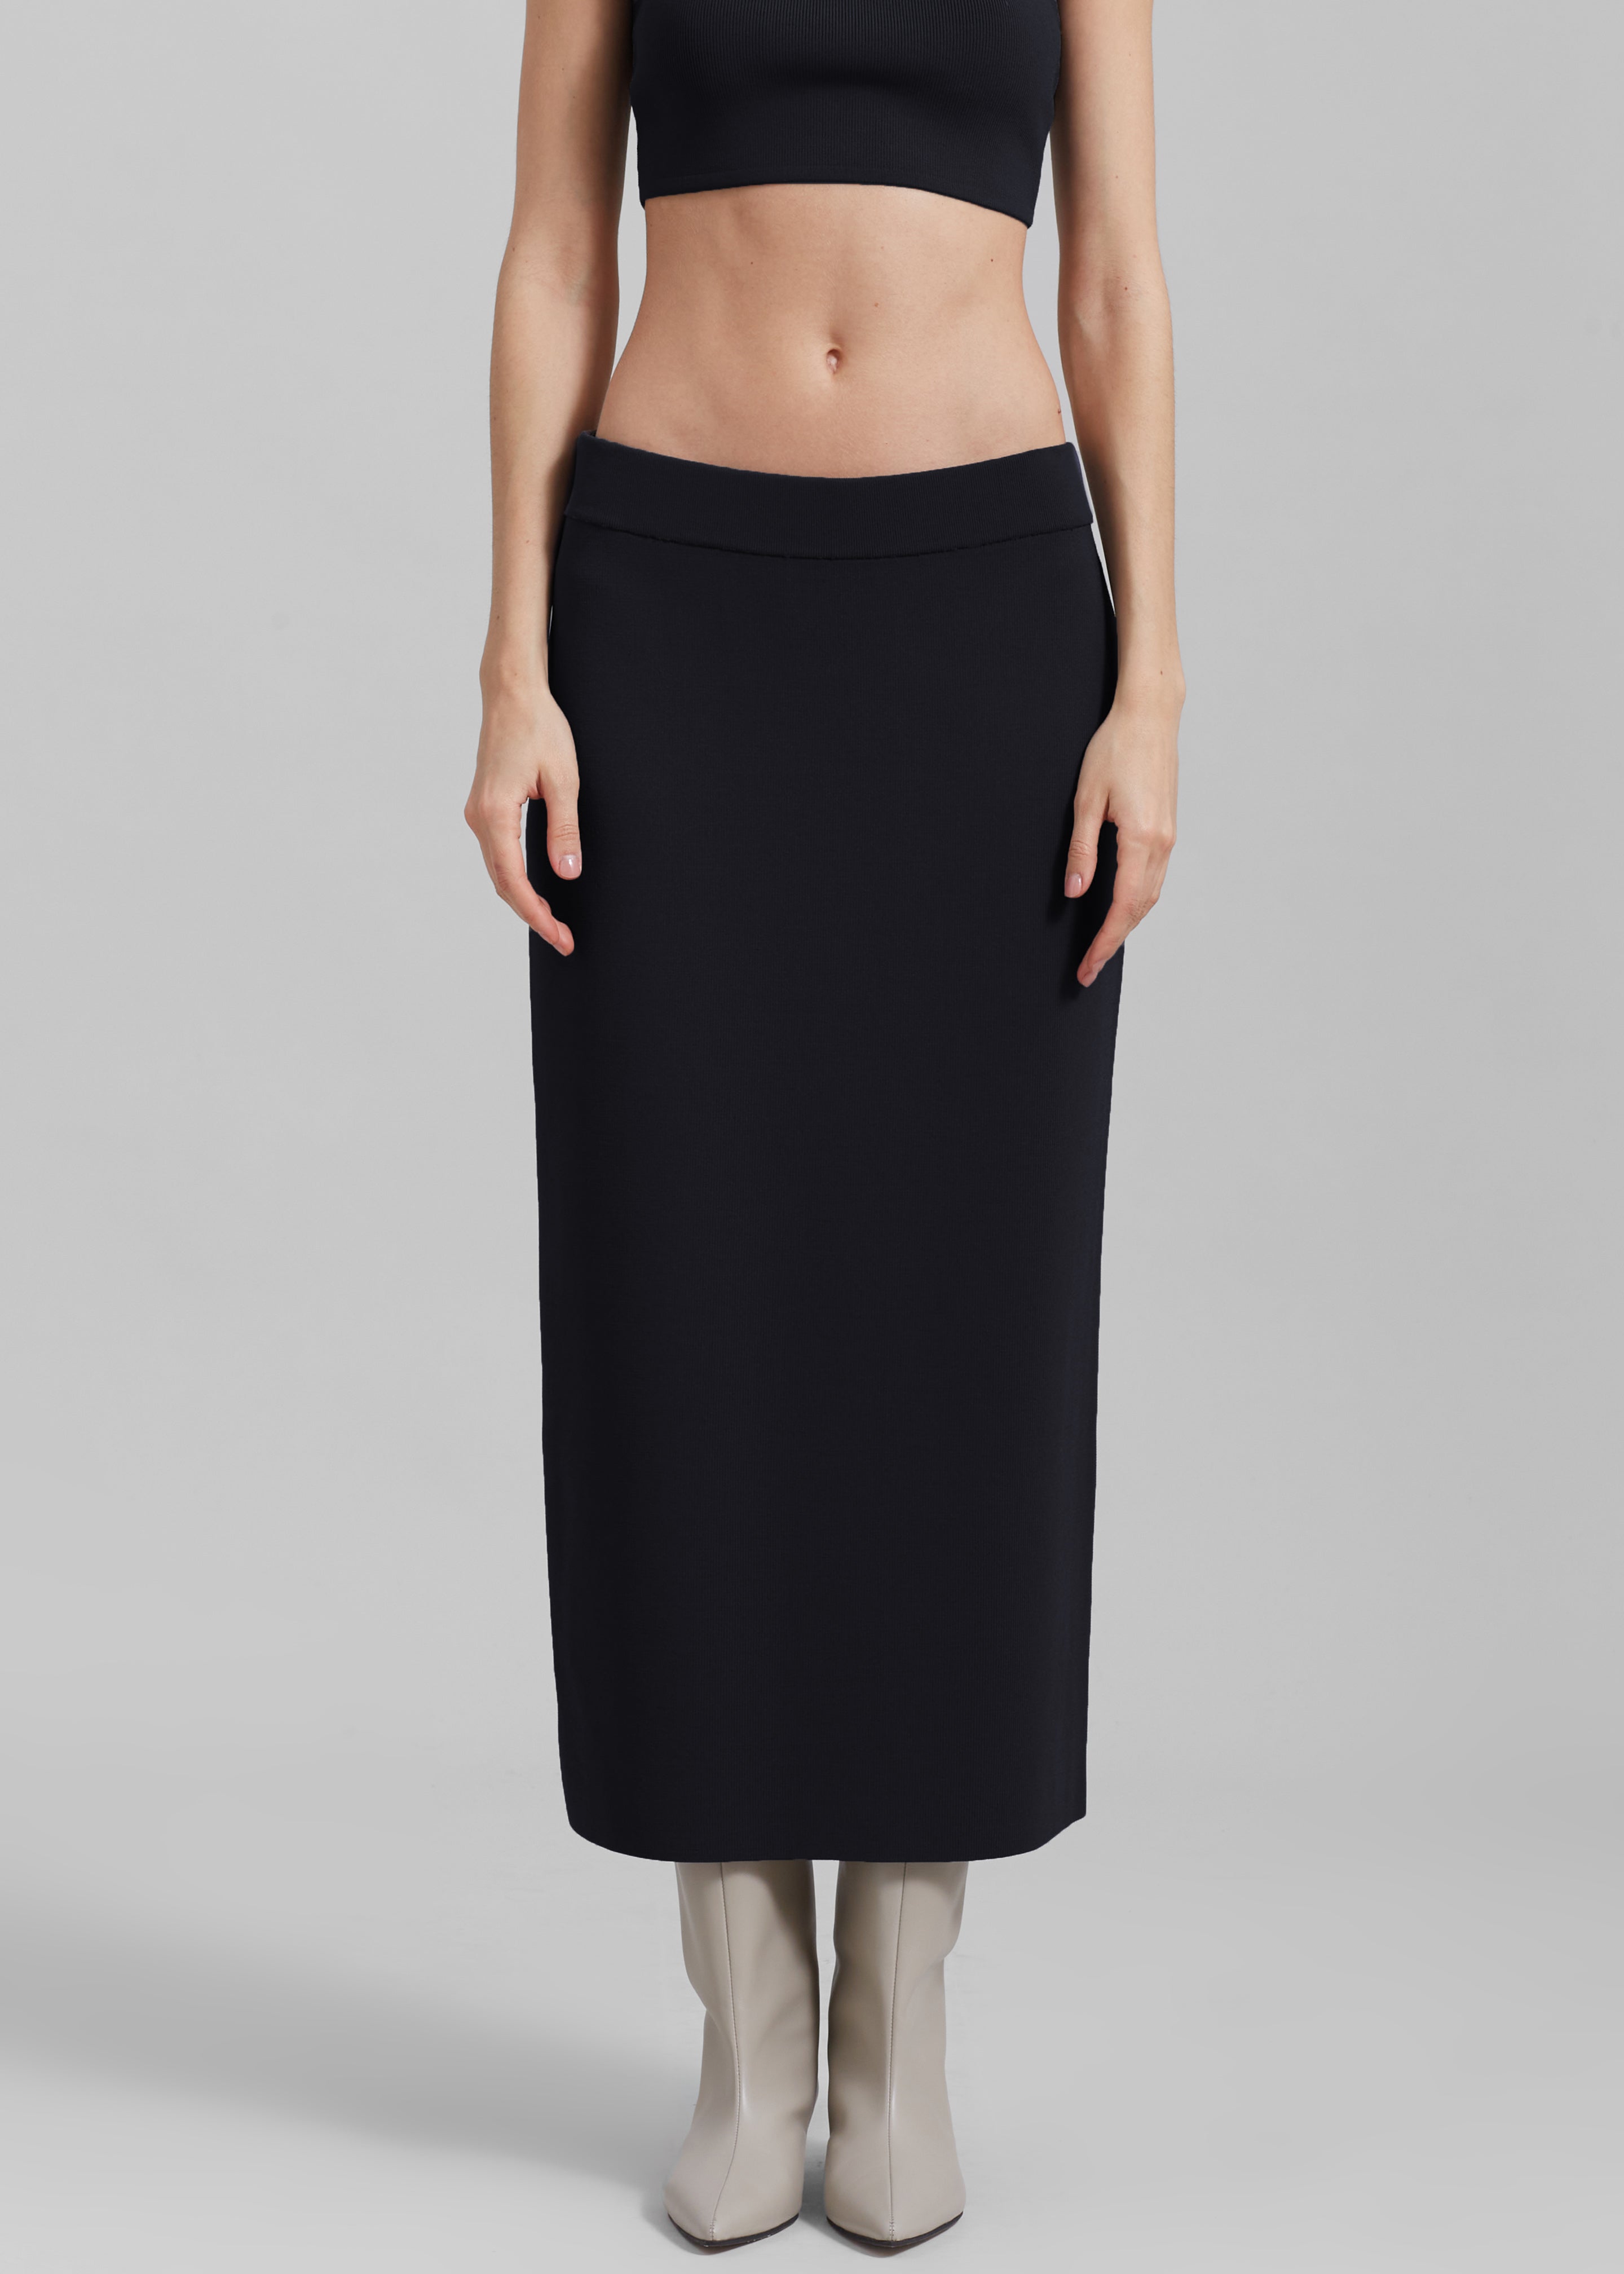 Solange Knit Pencil Skirt - Black - 5